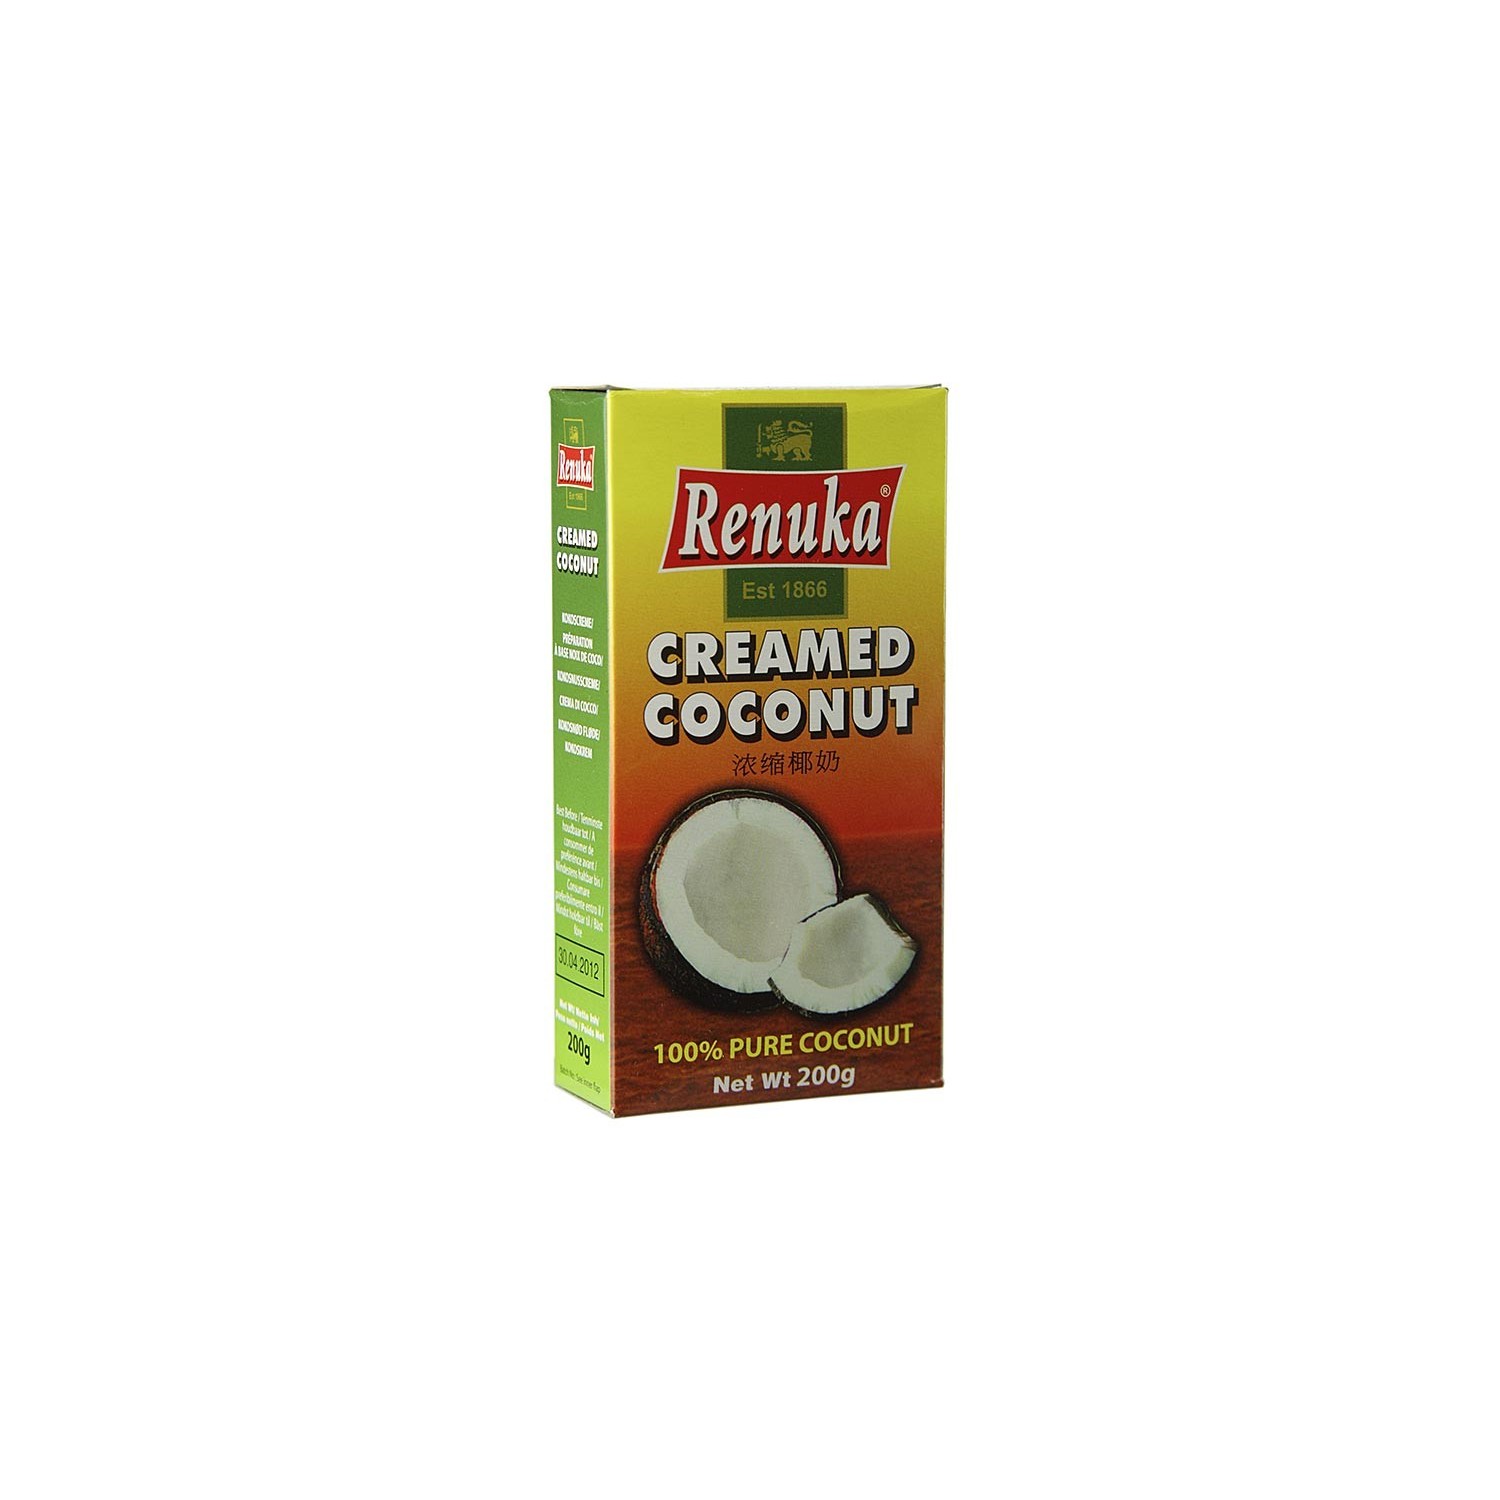 Renuka 200g Creamed Coconut